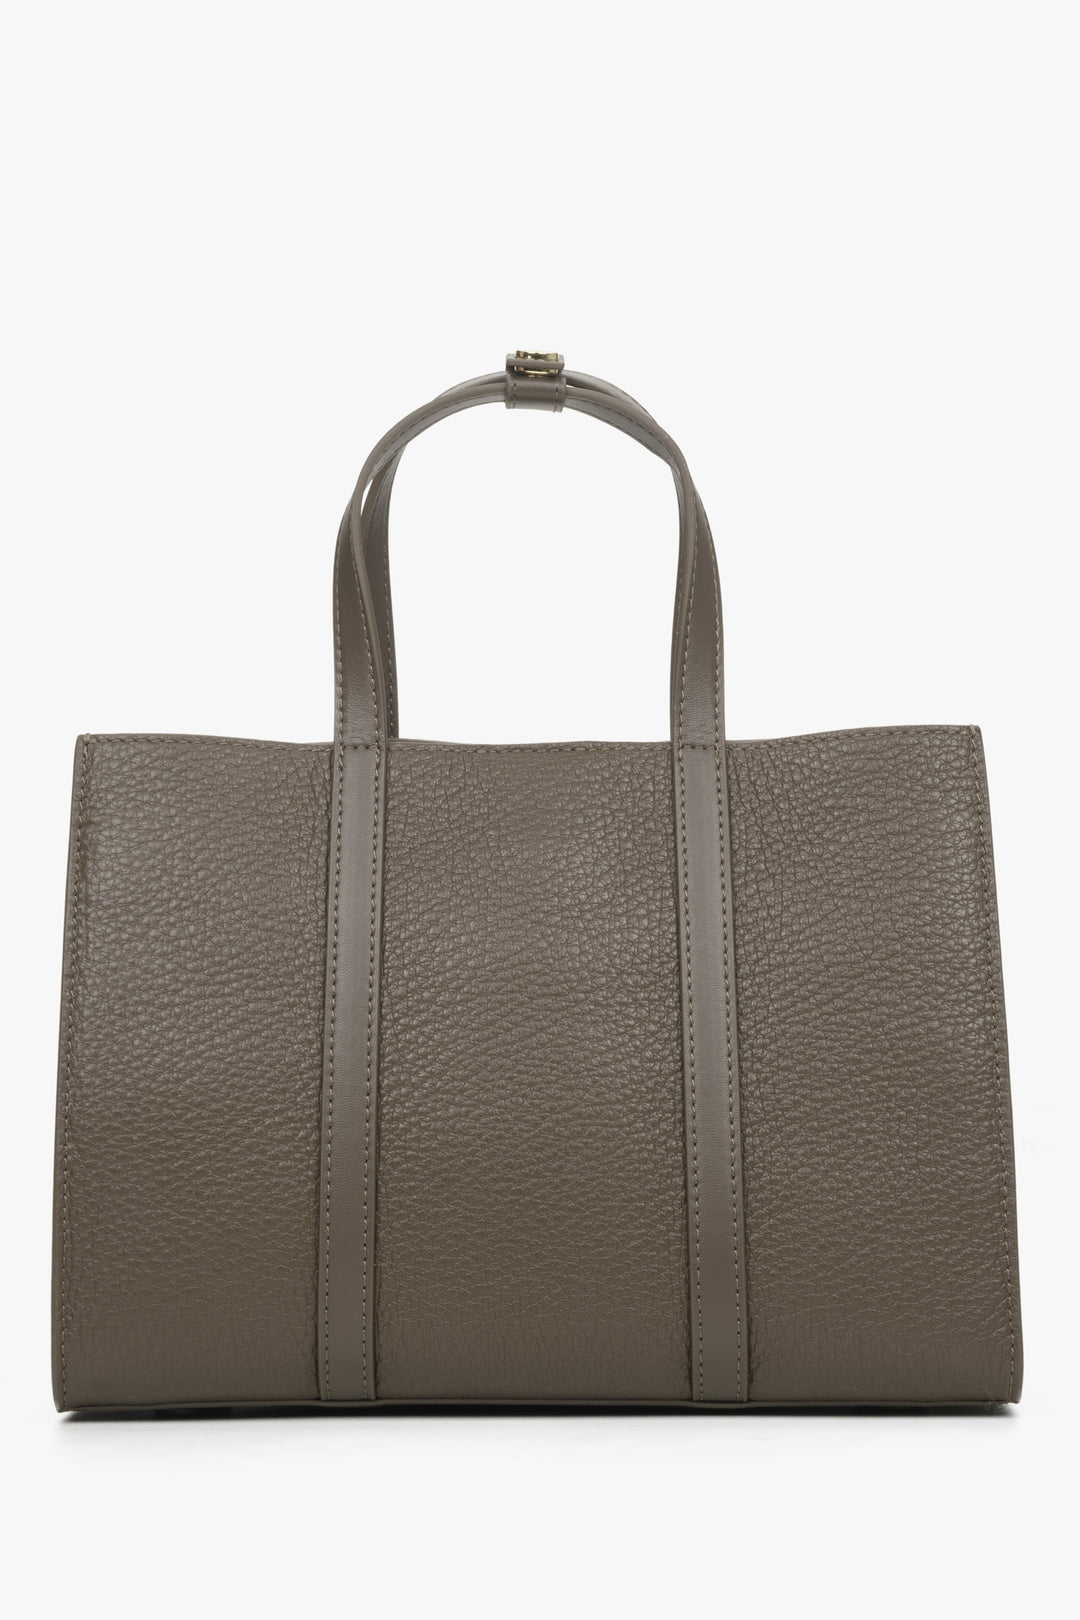 Brown leather shopper bag by Estro.